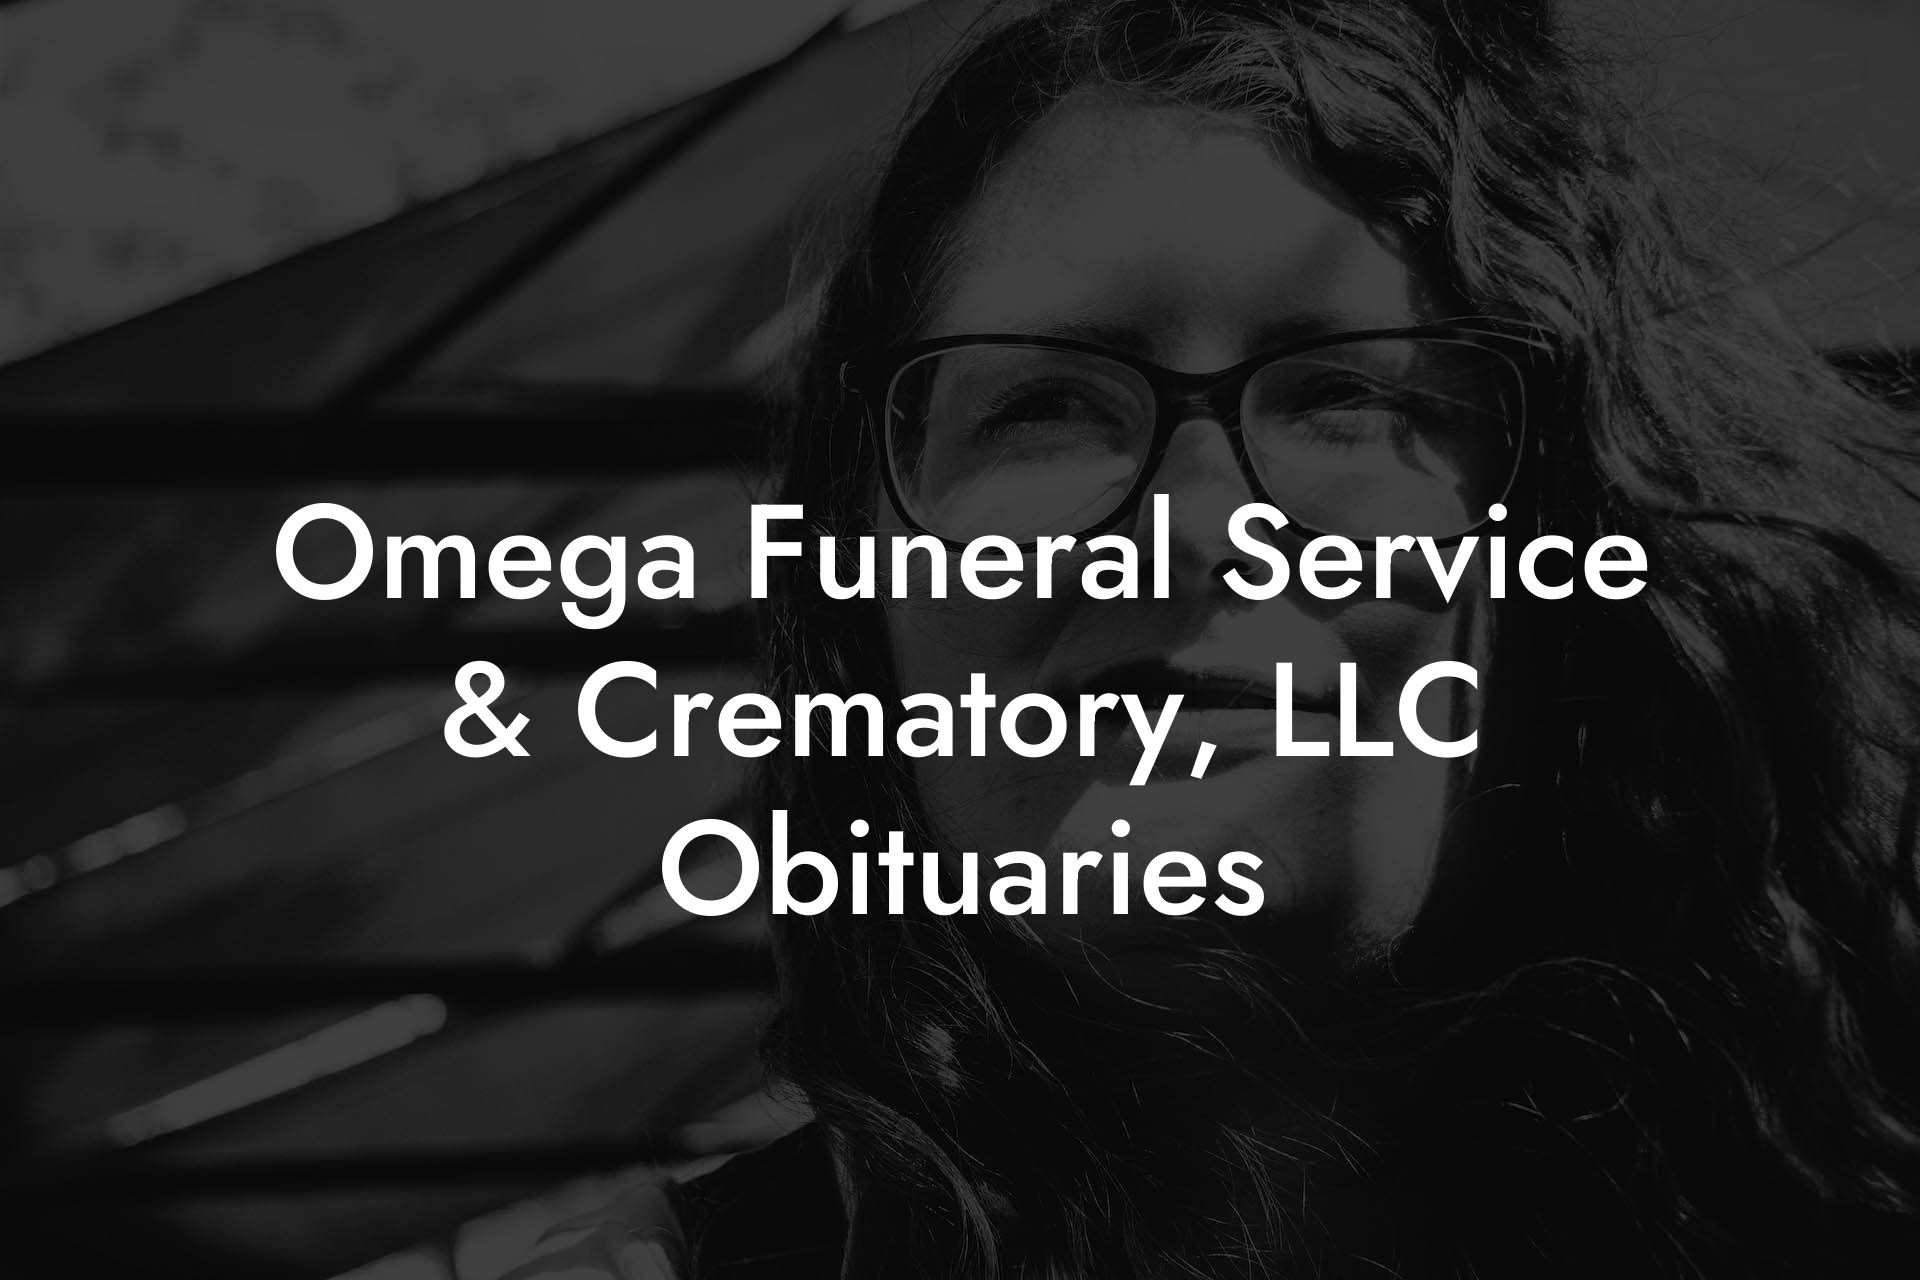 Omega Funeral Service & Crematory, LLC Obituaries